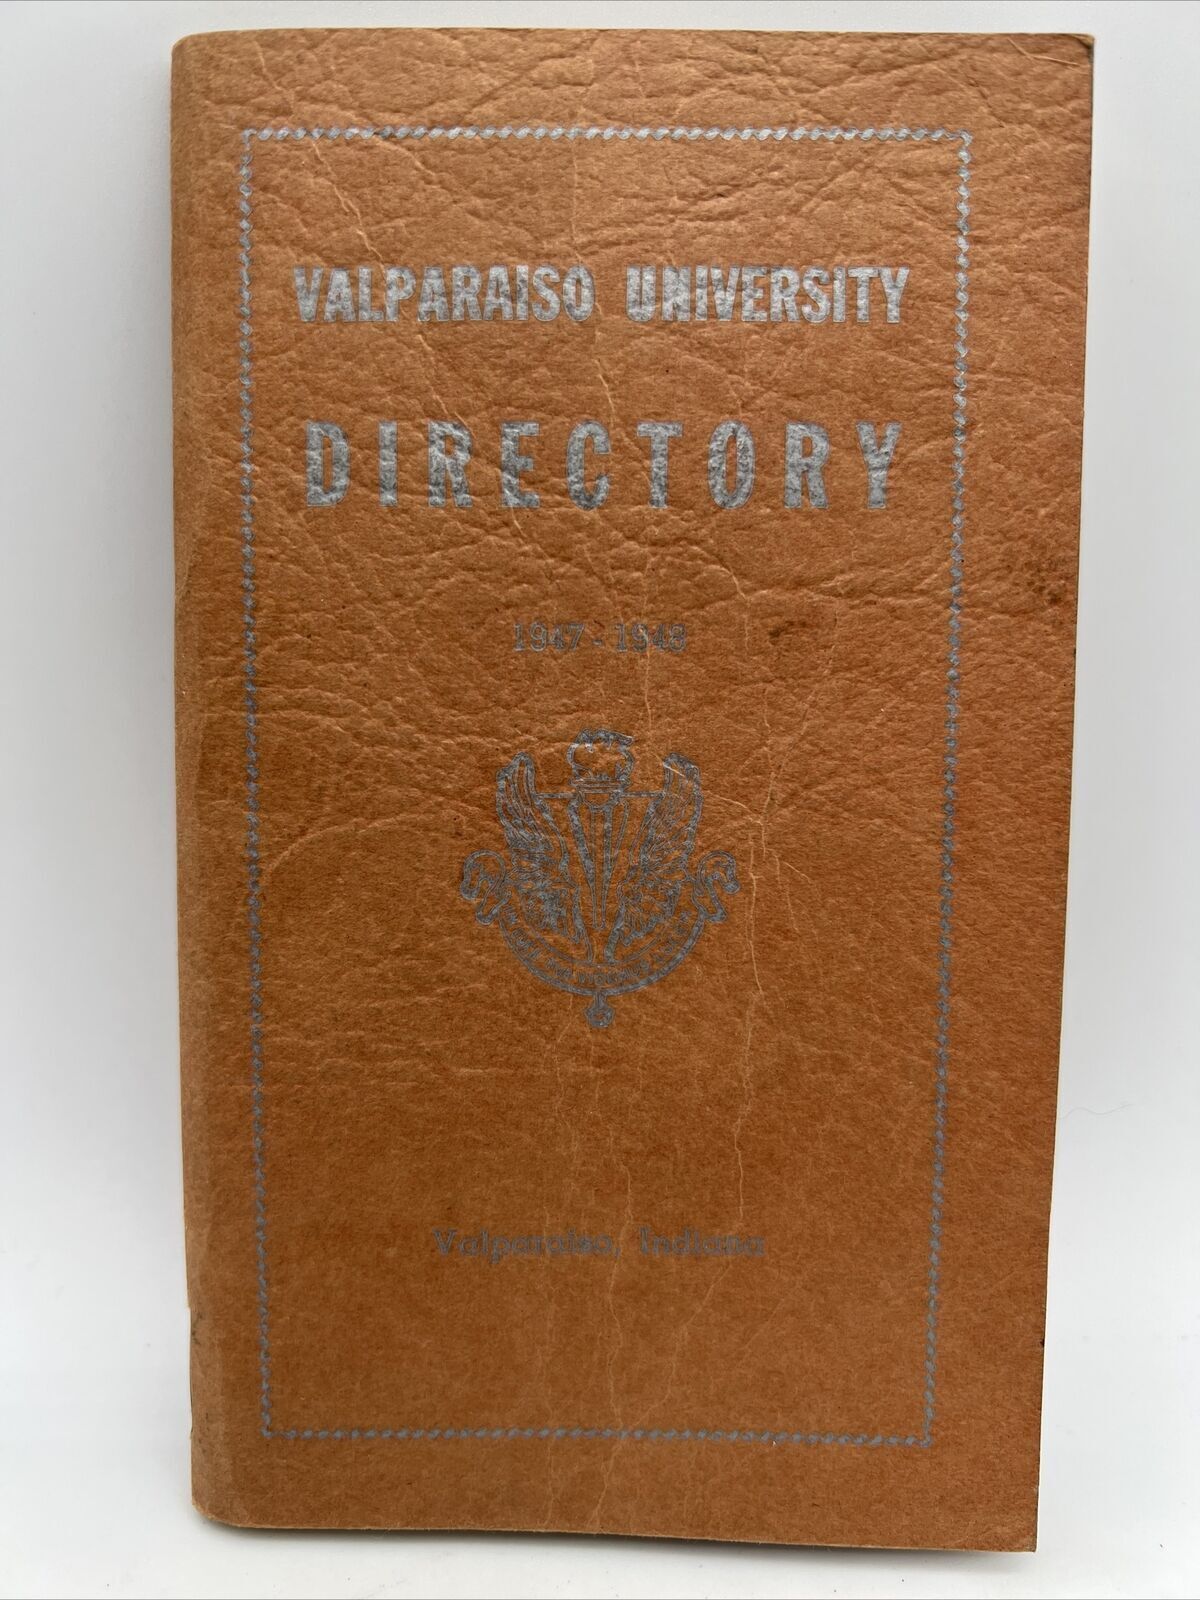 1947-48 VALPARAISO UNIVERSITY DIRECTORY Indiana Pocket Notebook Phone Numbers